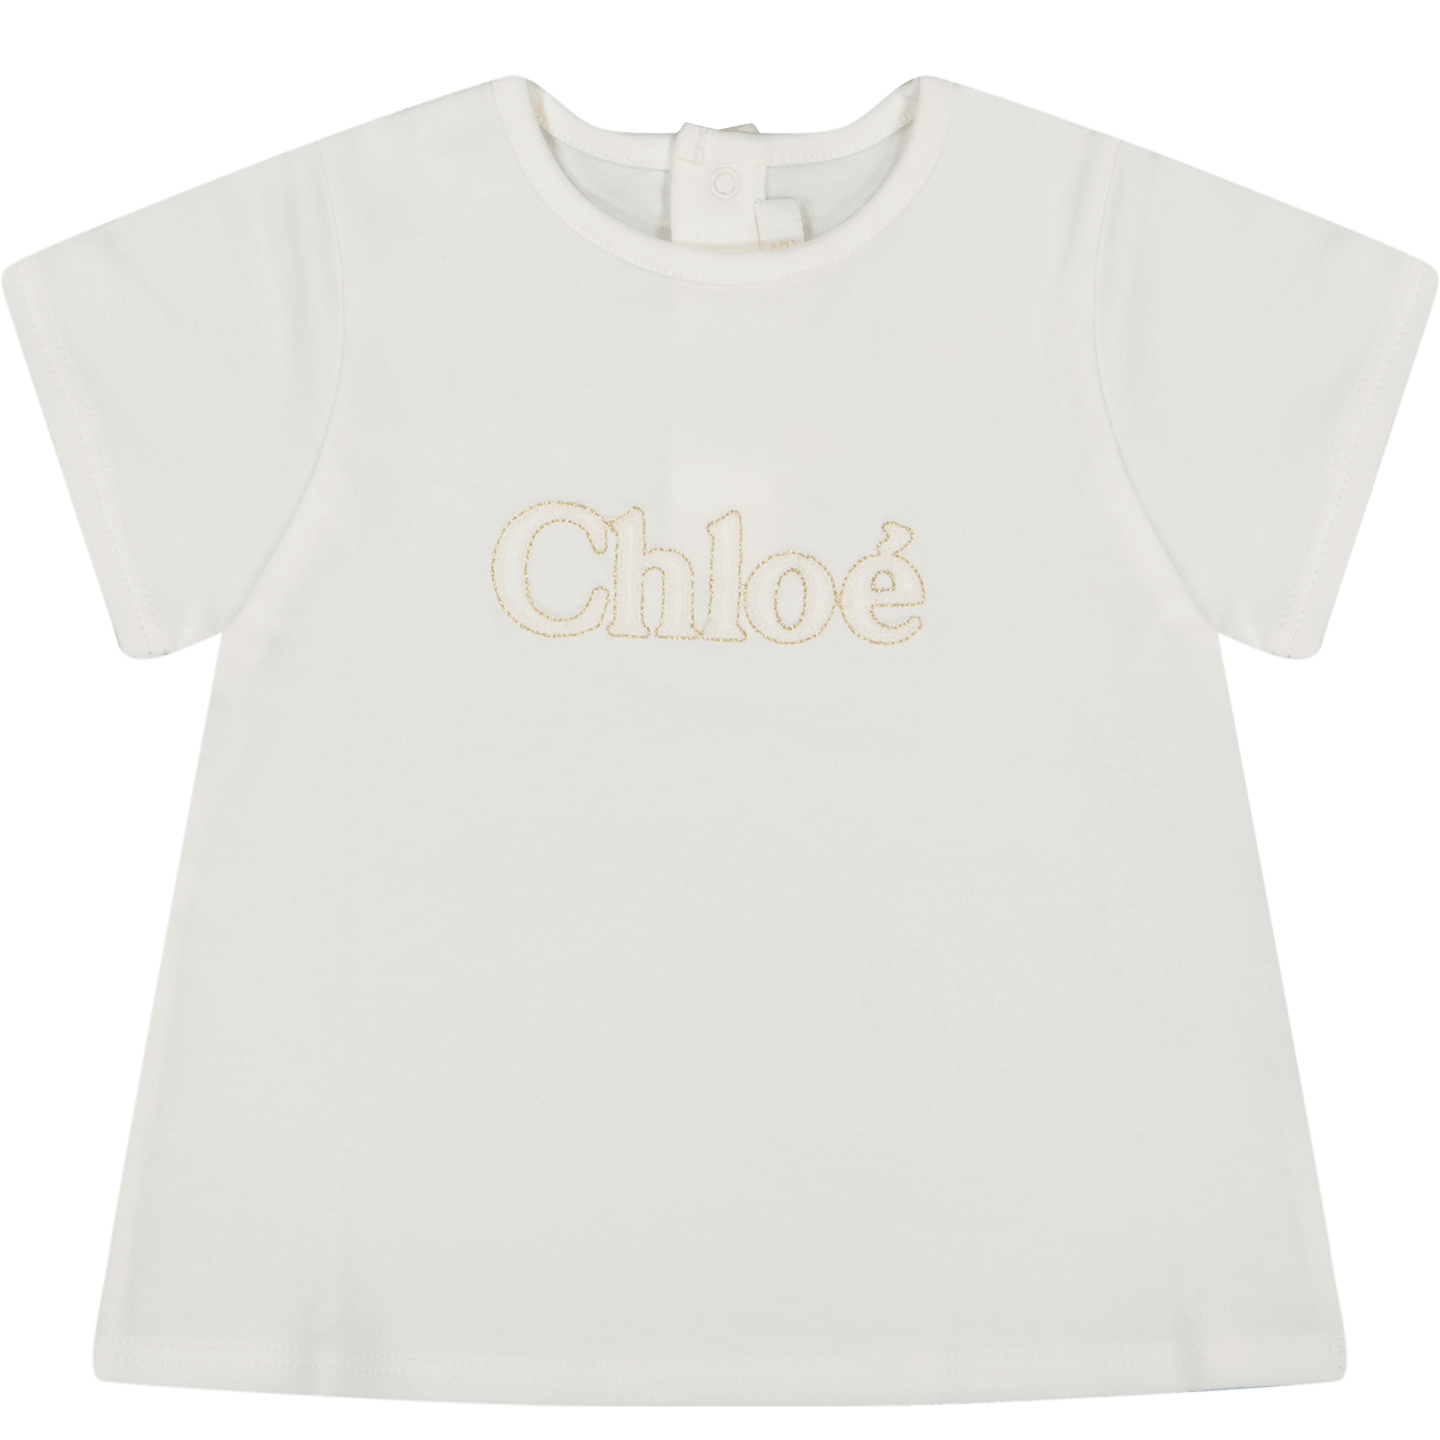 Chloe Baby Meisjes T-Shirt Off White 6 mnd